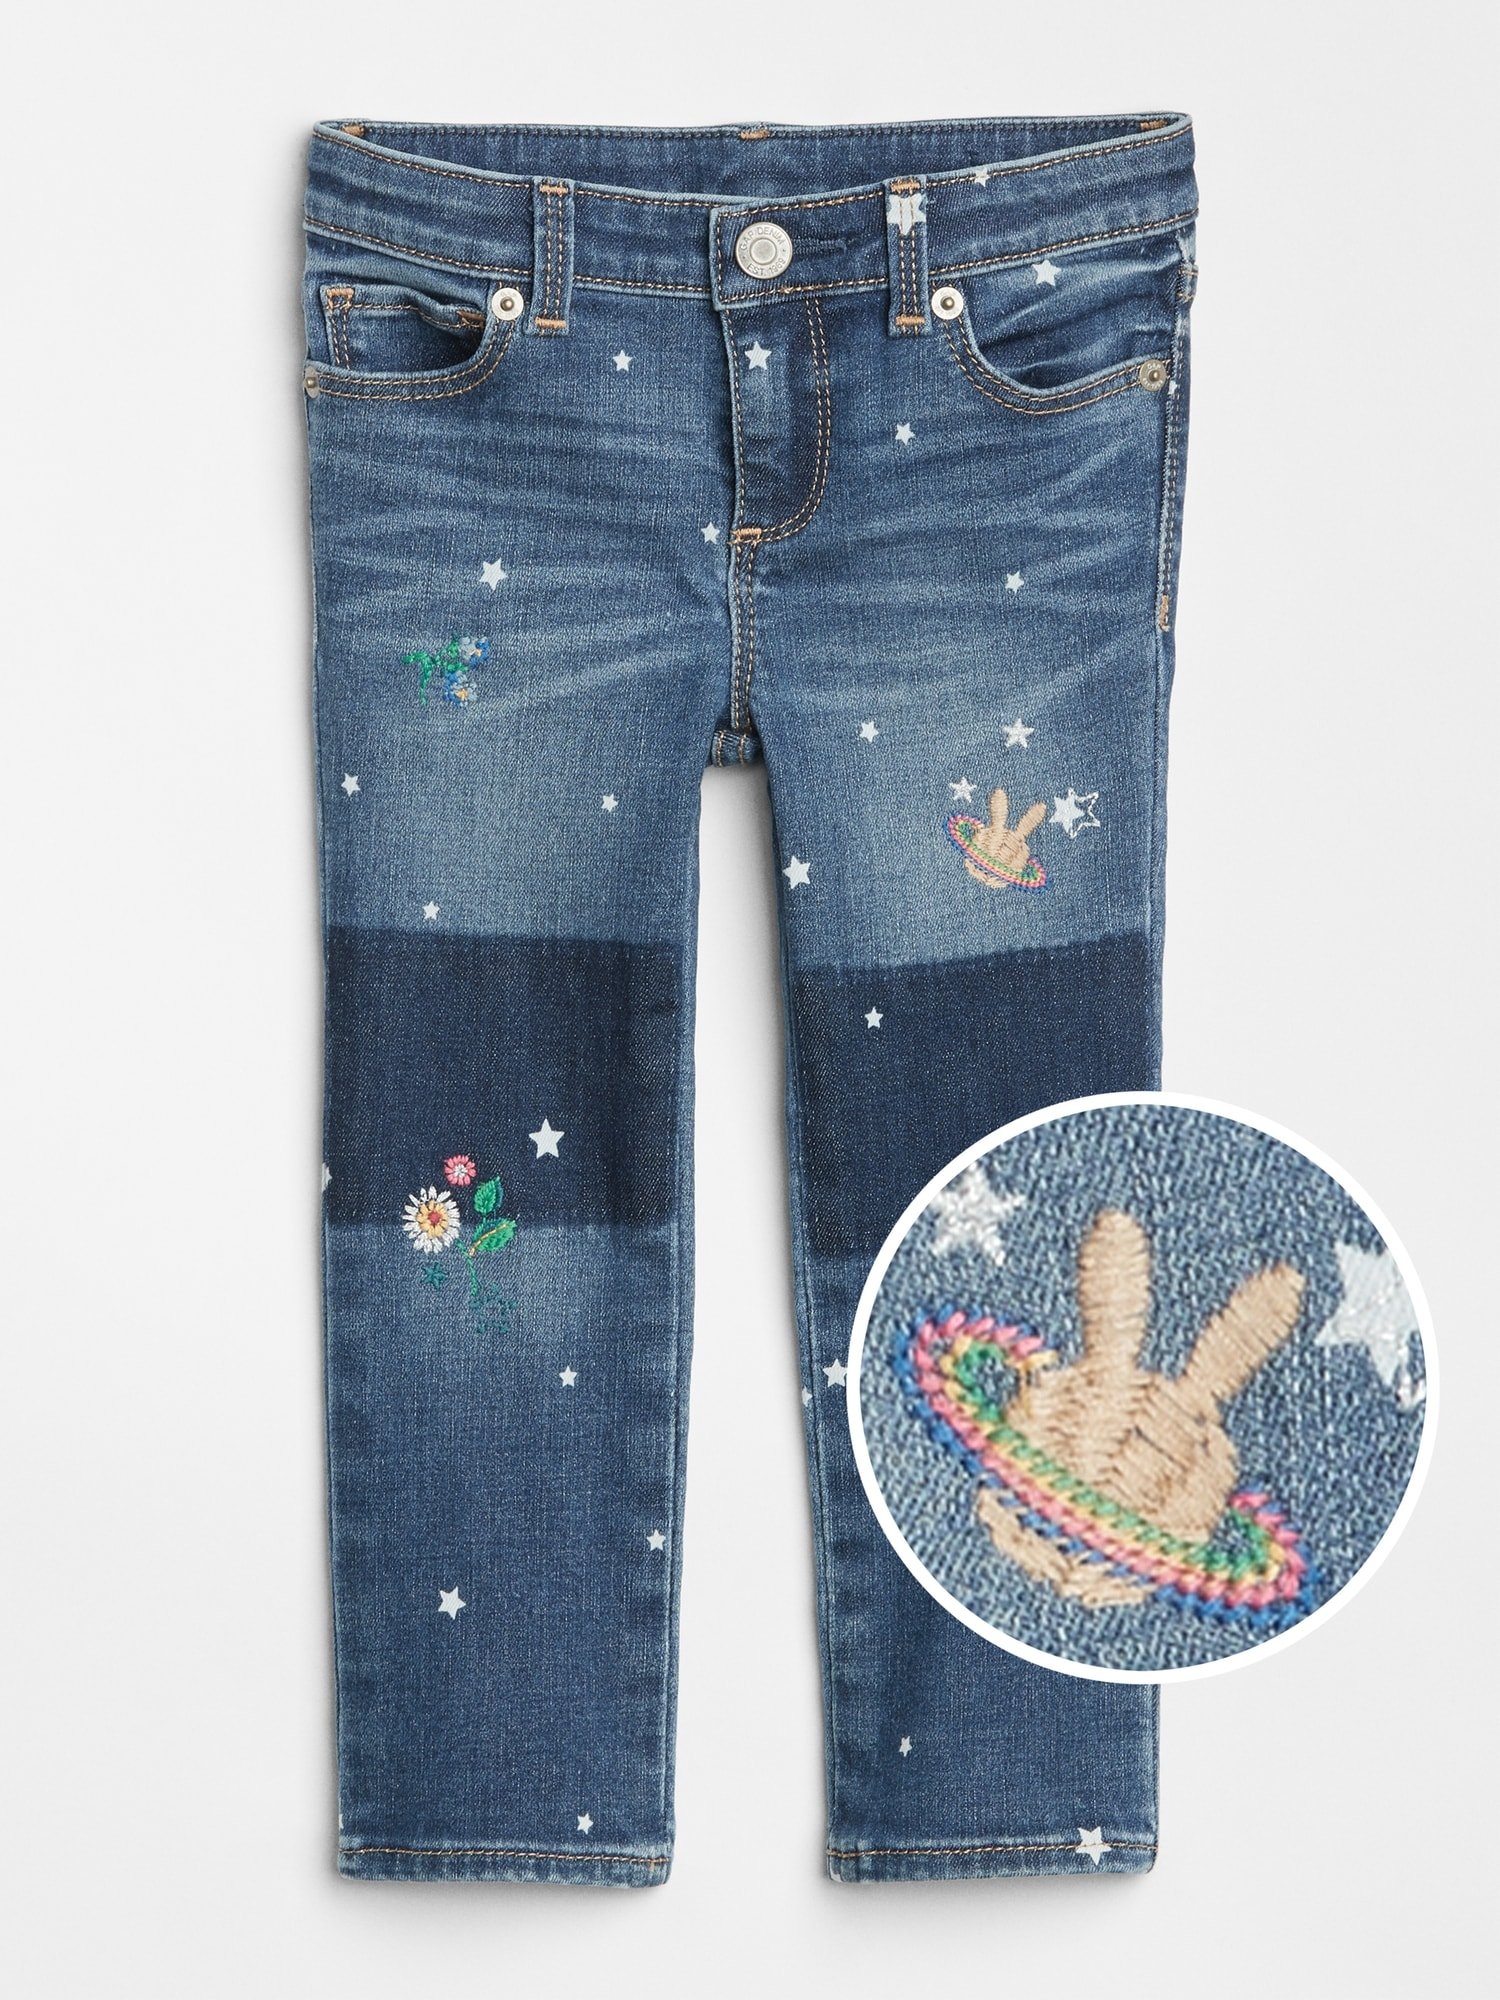 Gap | Sarah Jessica Parker İşlemeli Skinny Jean Pantolon product image